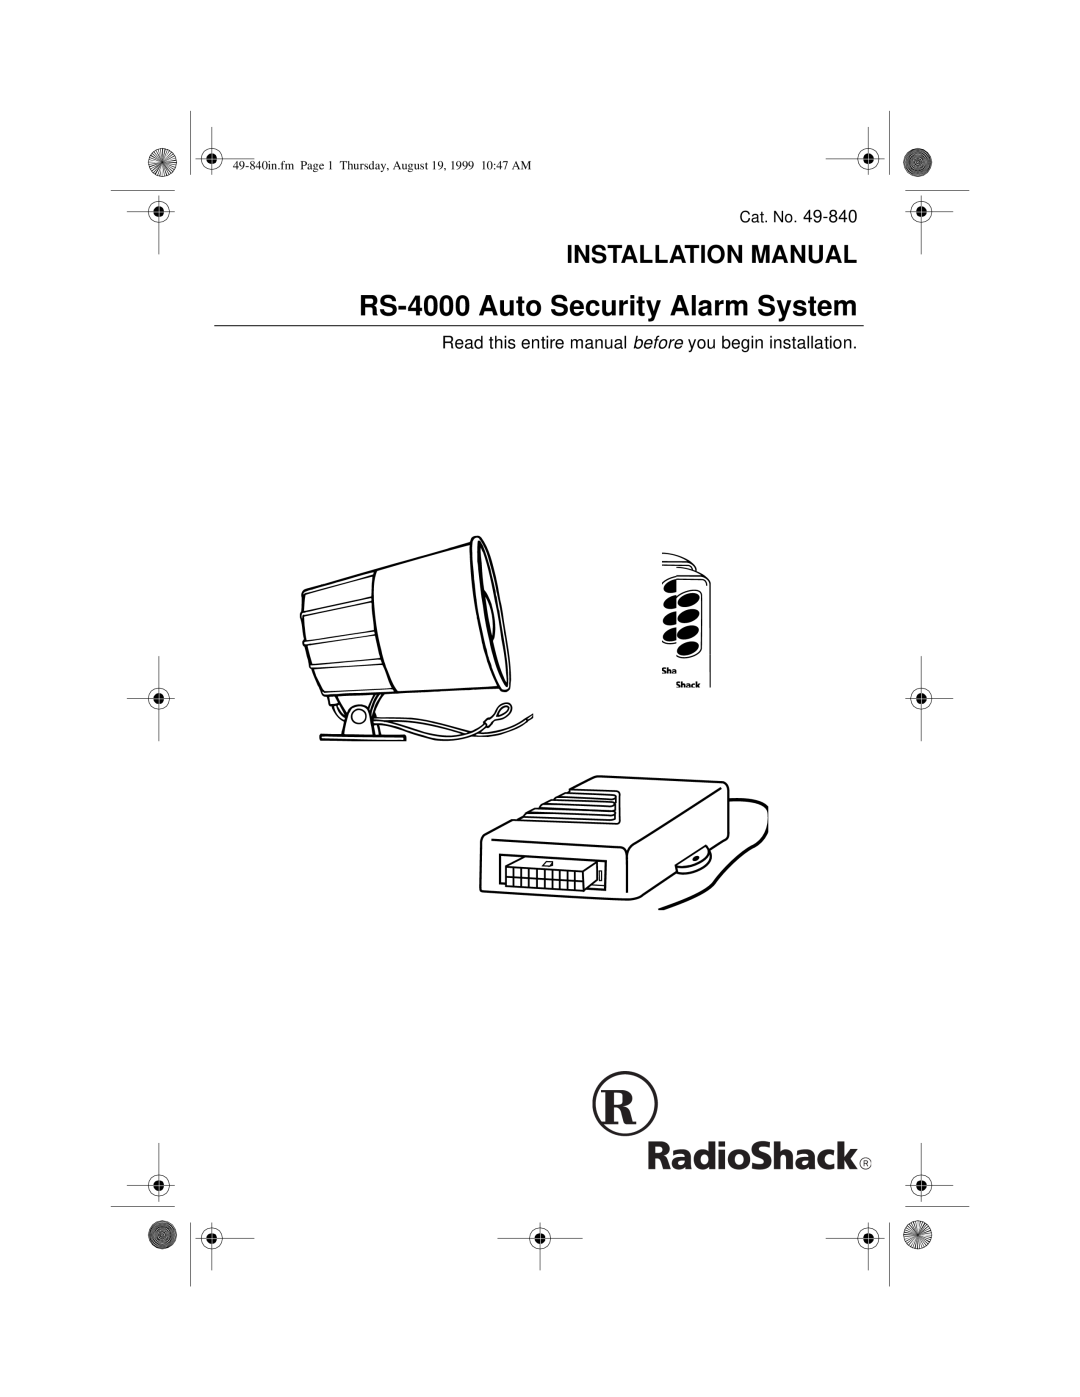 Radio Shack installation manual RS-4000Auto Security Alarm System, Installation Manual 